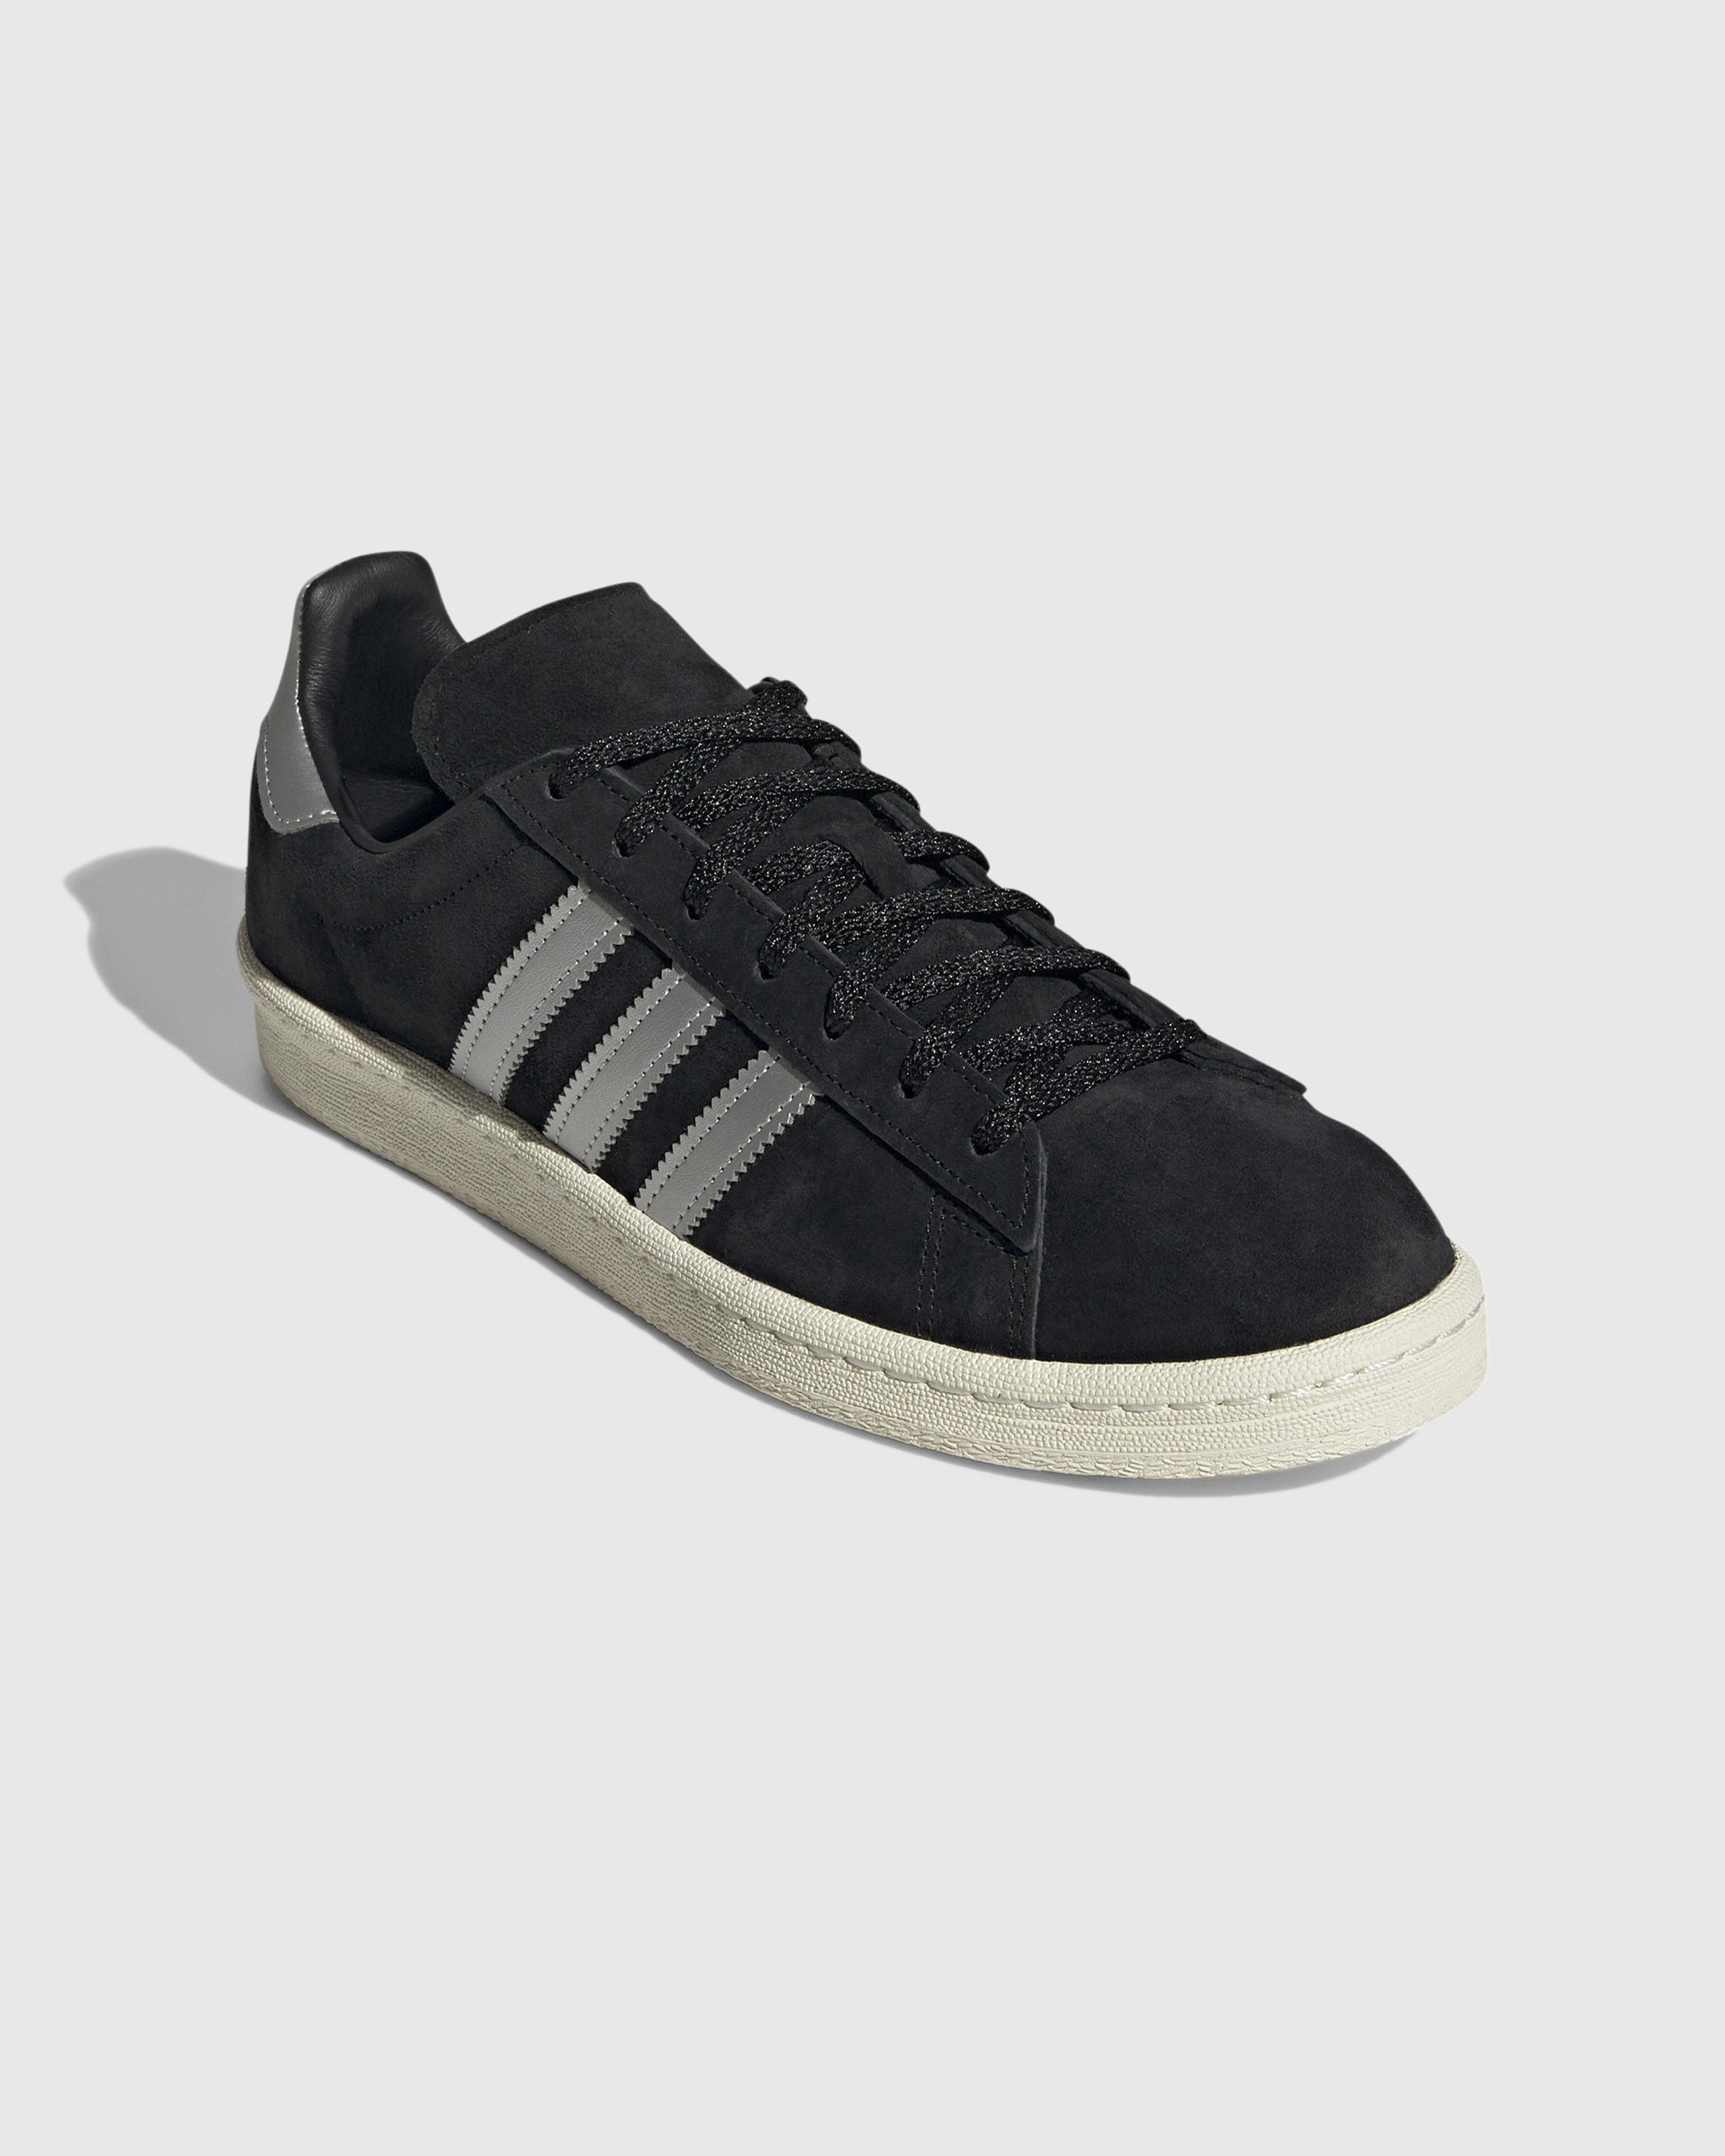 Adidas - Campus Black - Footwear - Black - Image 3